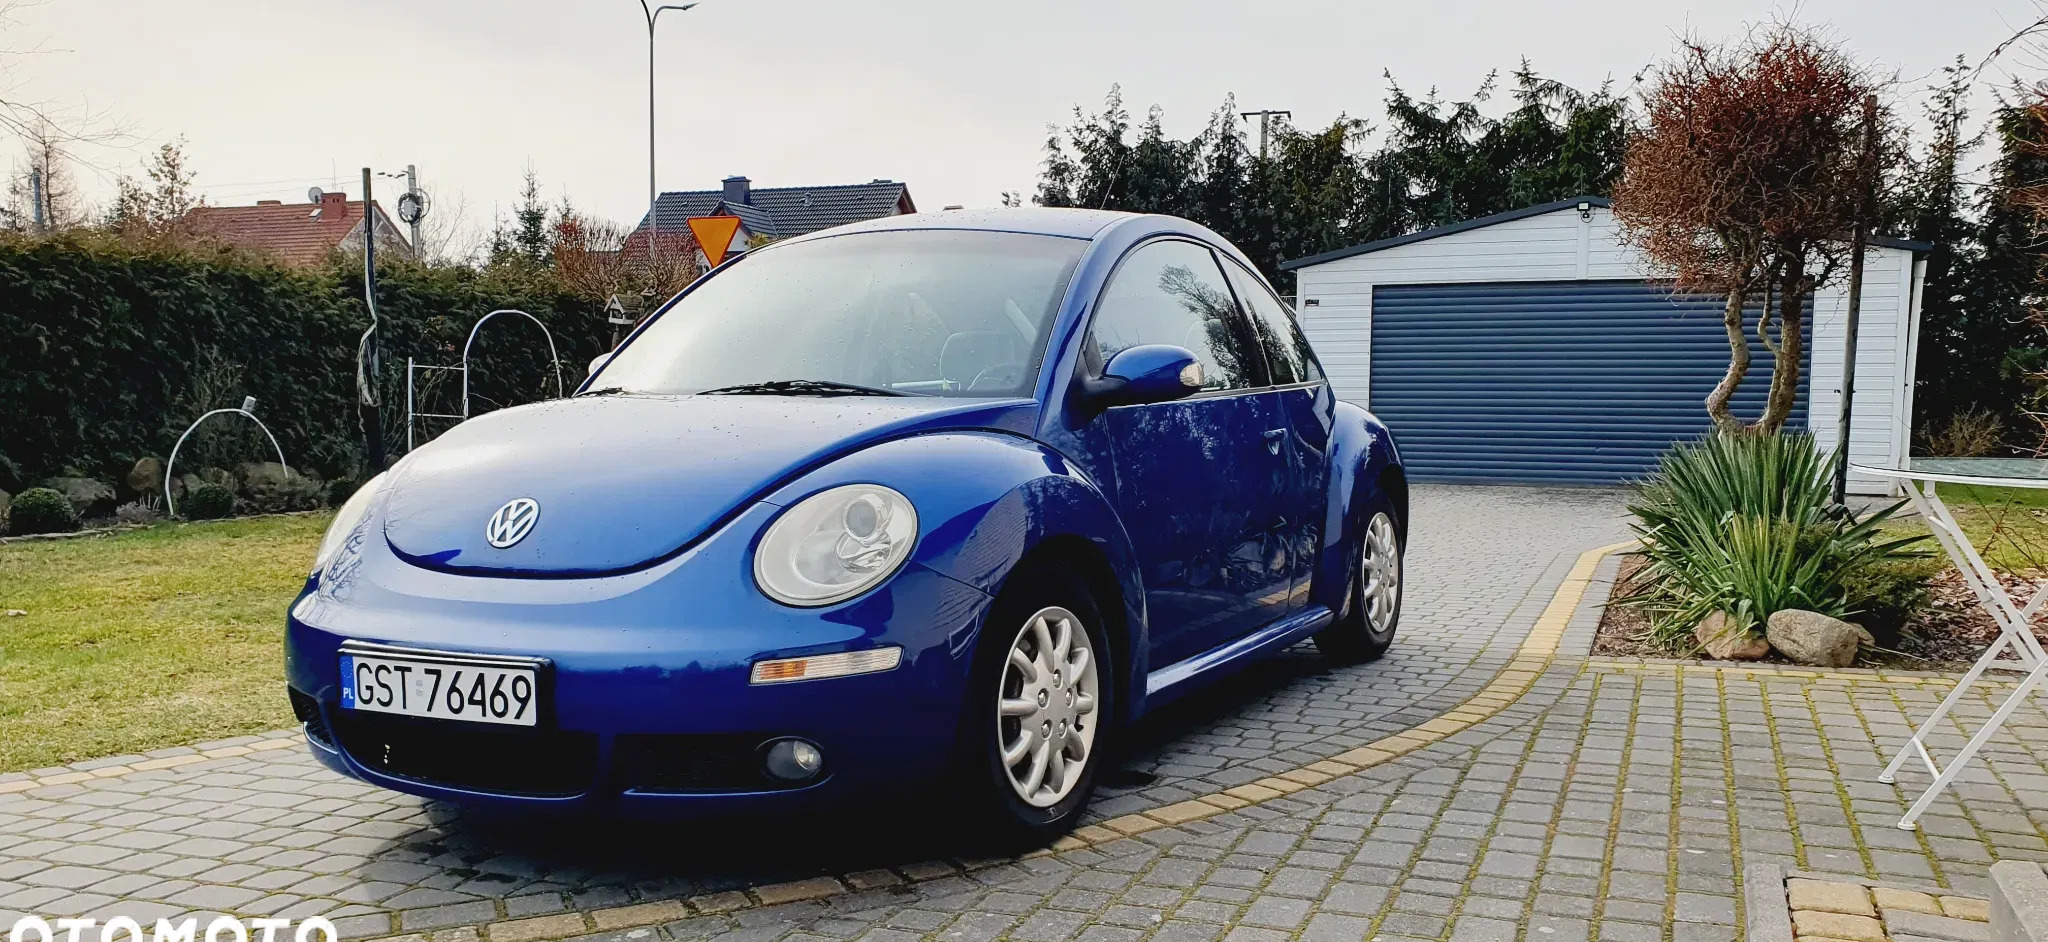 volkswagen Volkswagen New Beetle cena 14700 przebieg: 229903, rok produkcji 2005 z Lewin Brzeski